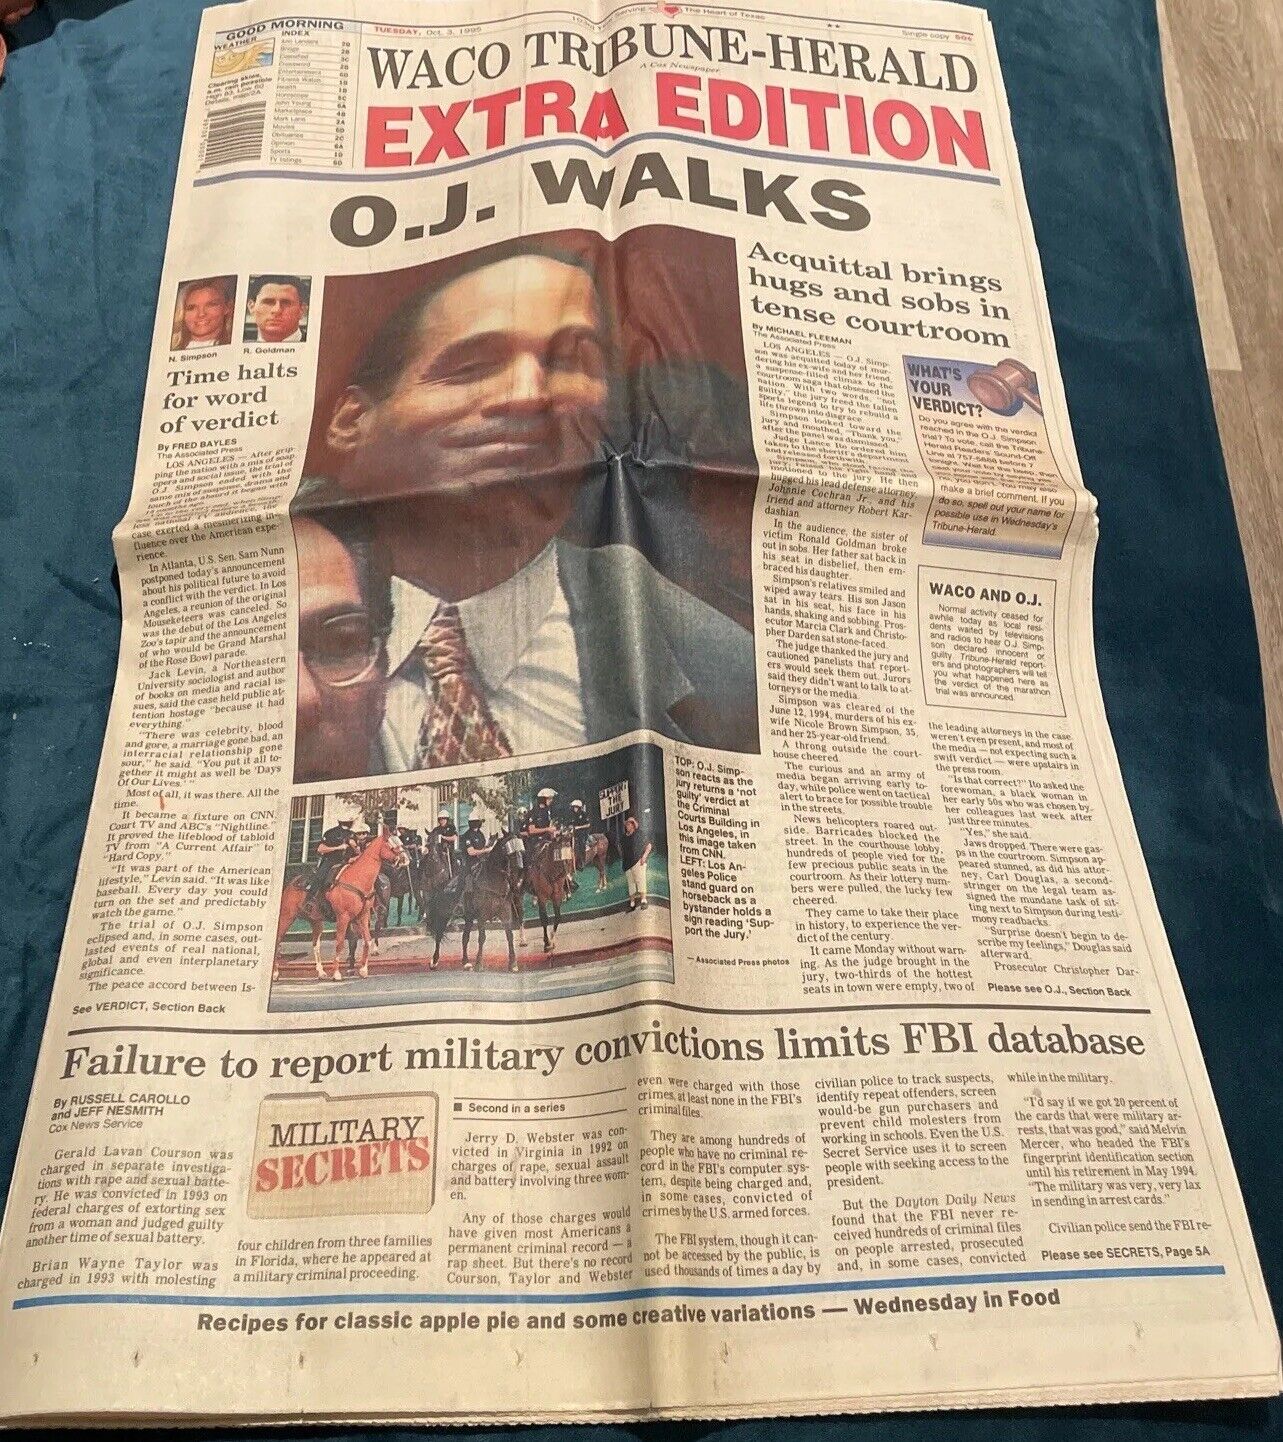 Waco Tribune Herald Oct 3, 1995 Special Edition Complete Newspaper “OJ Walks”